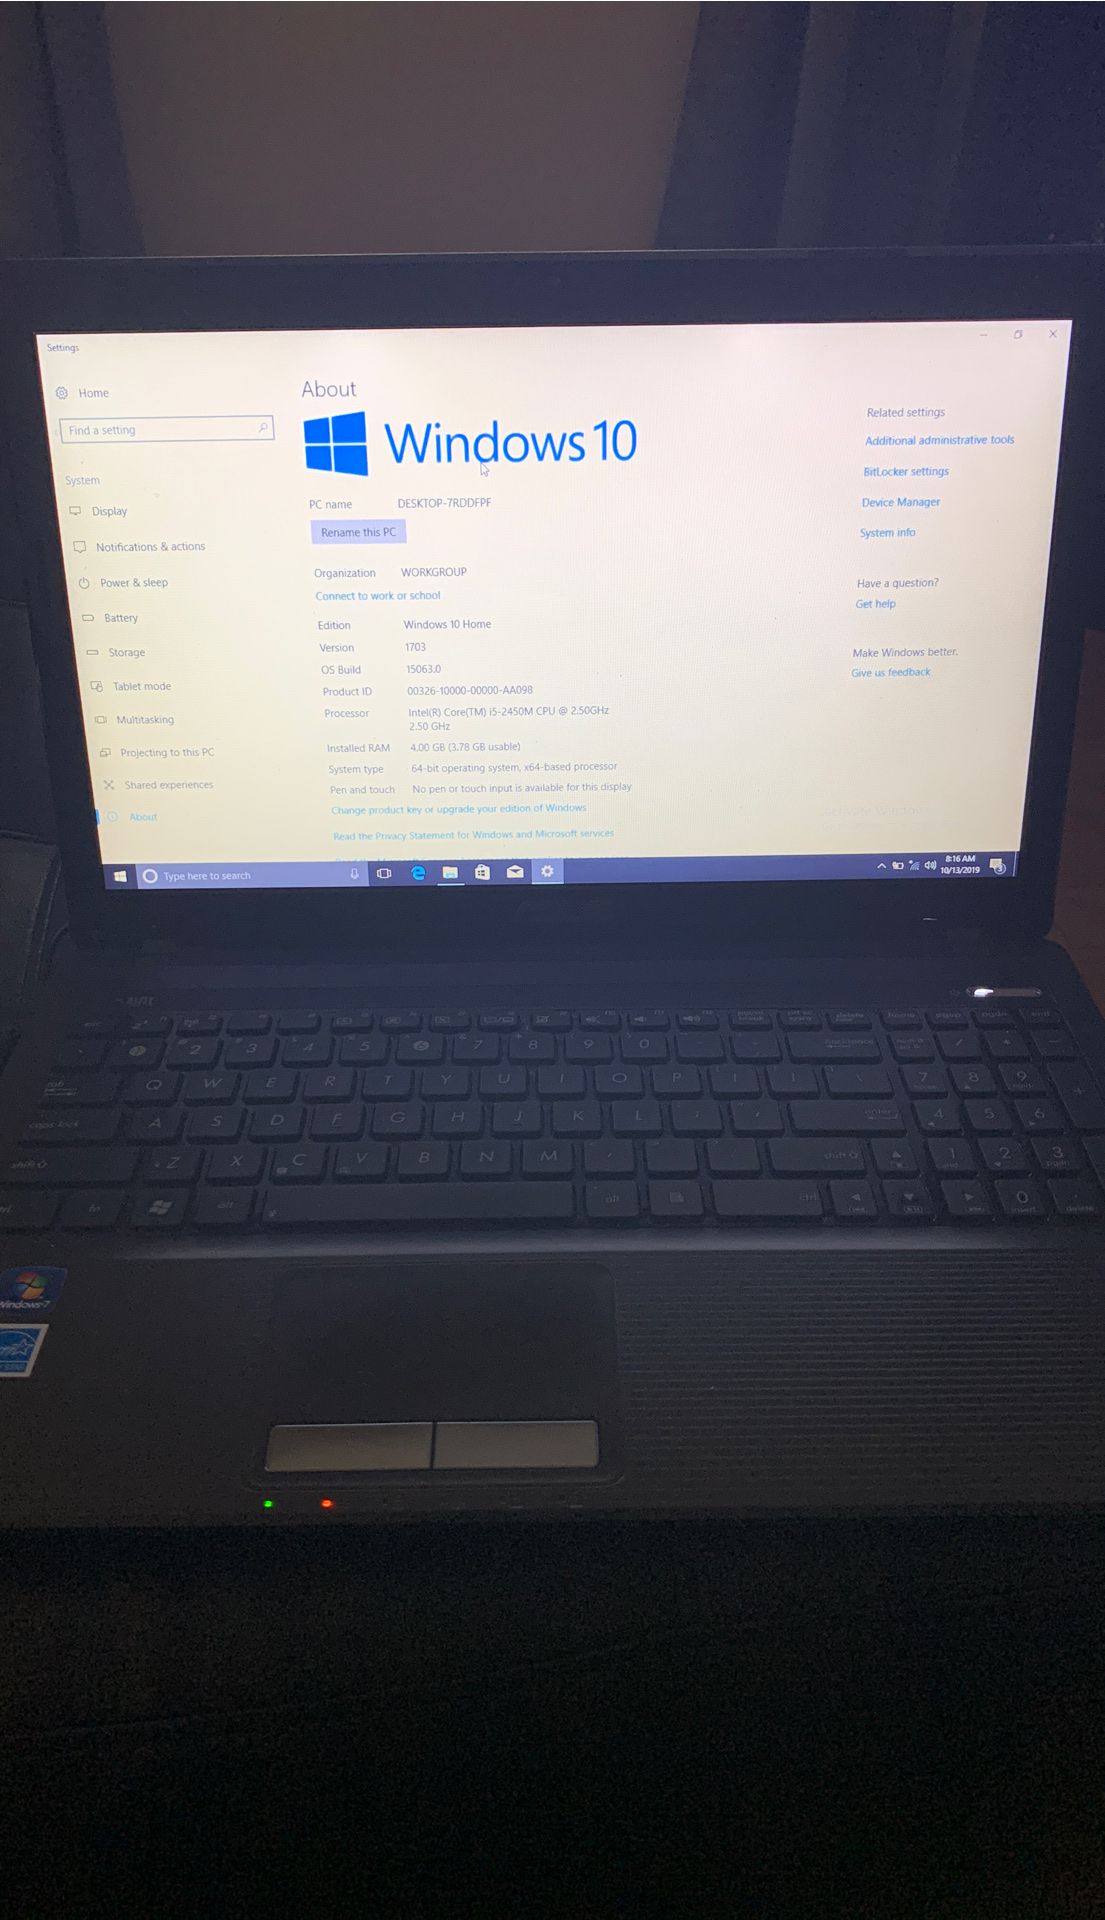 Asus windows laptop with windows 10